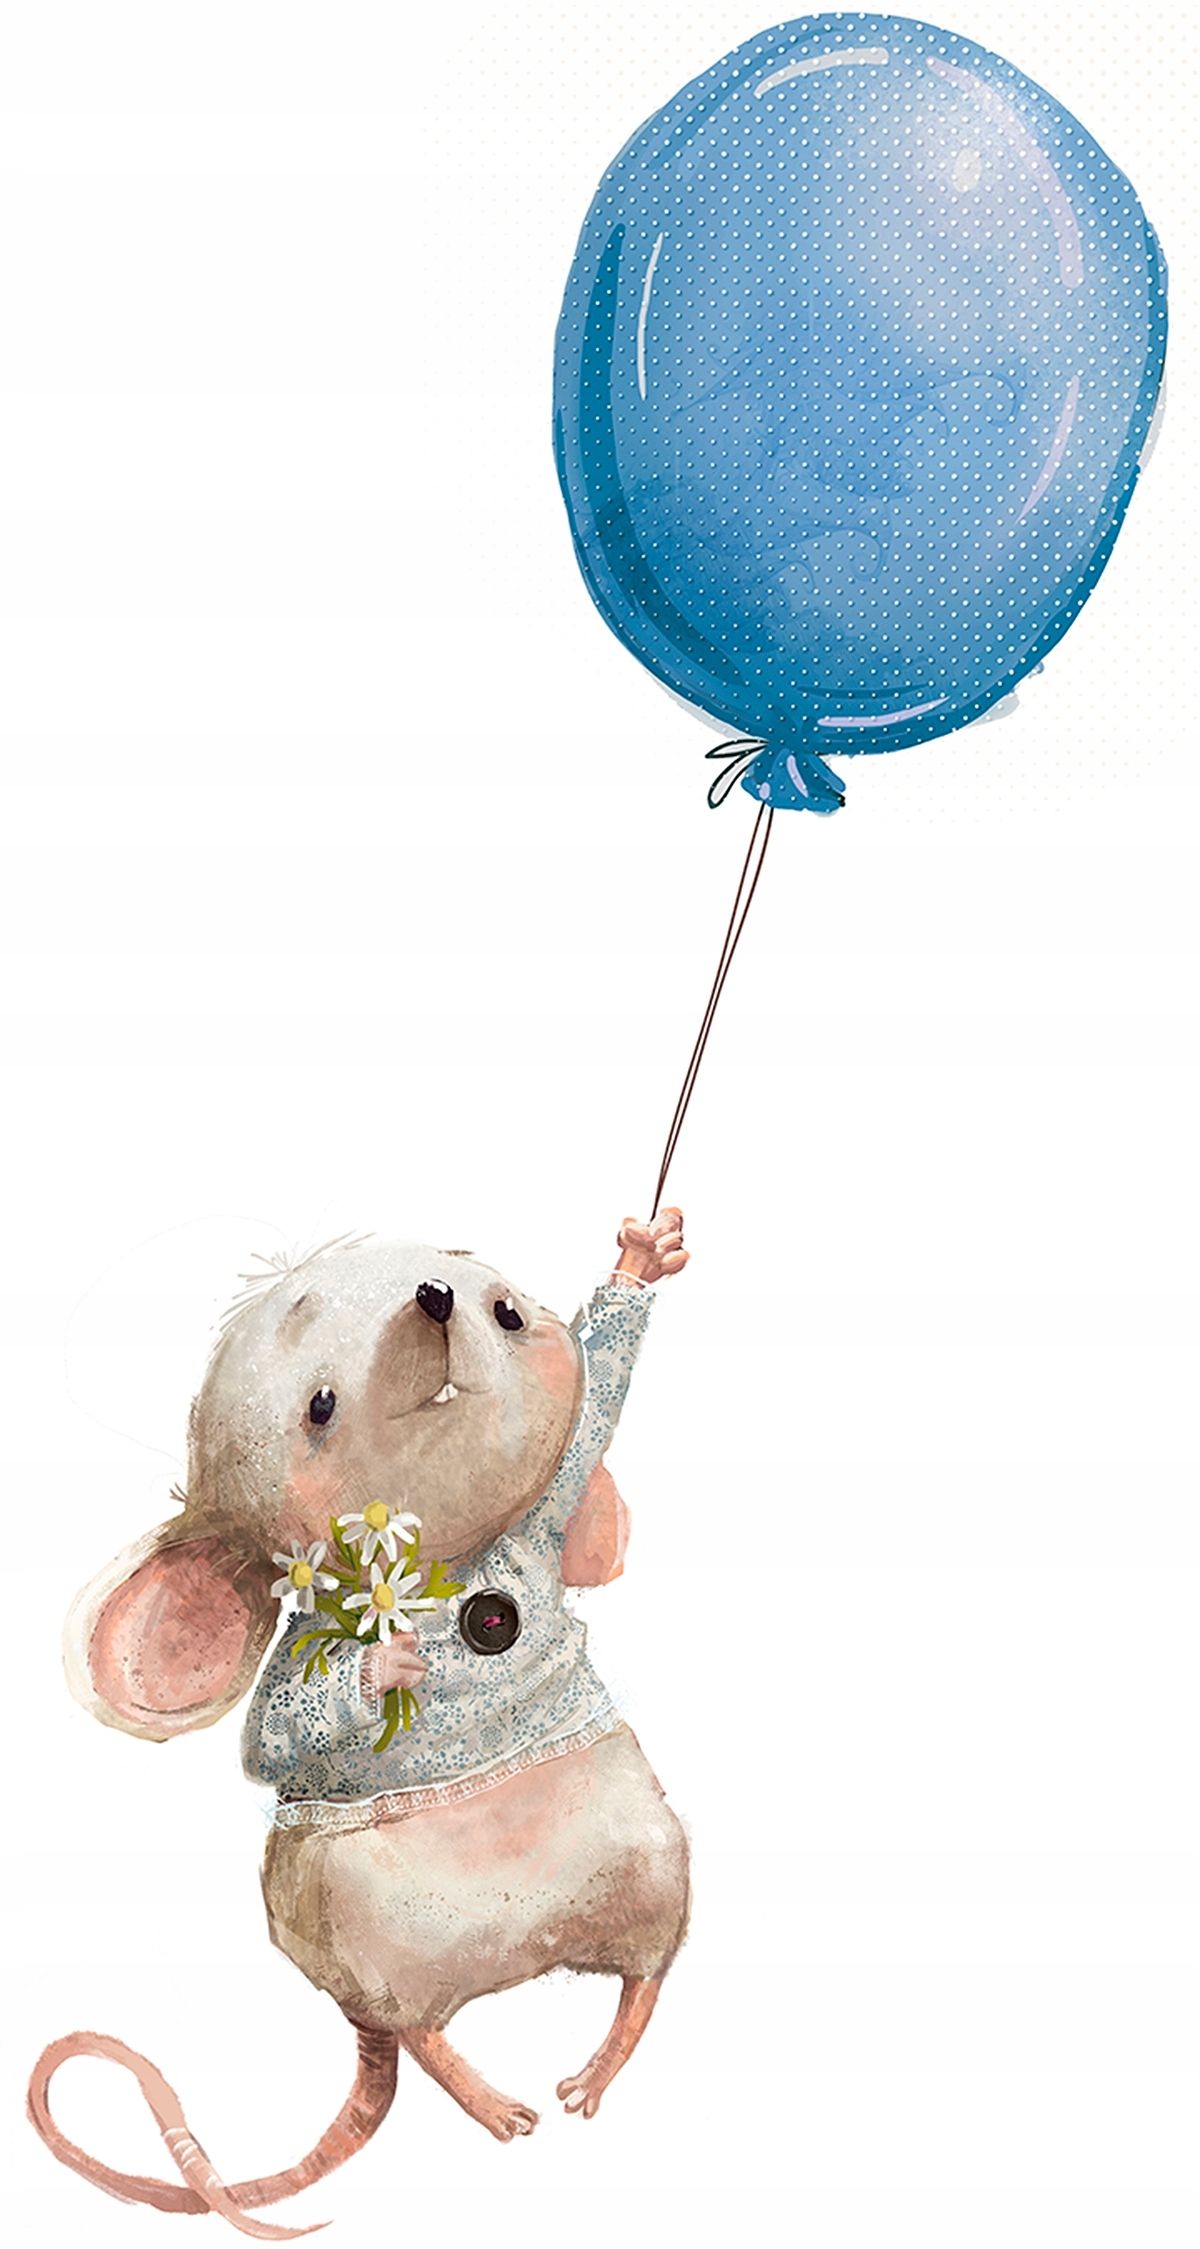 Ballon - Maus Wandtattoo mit